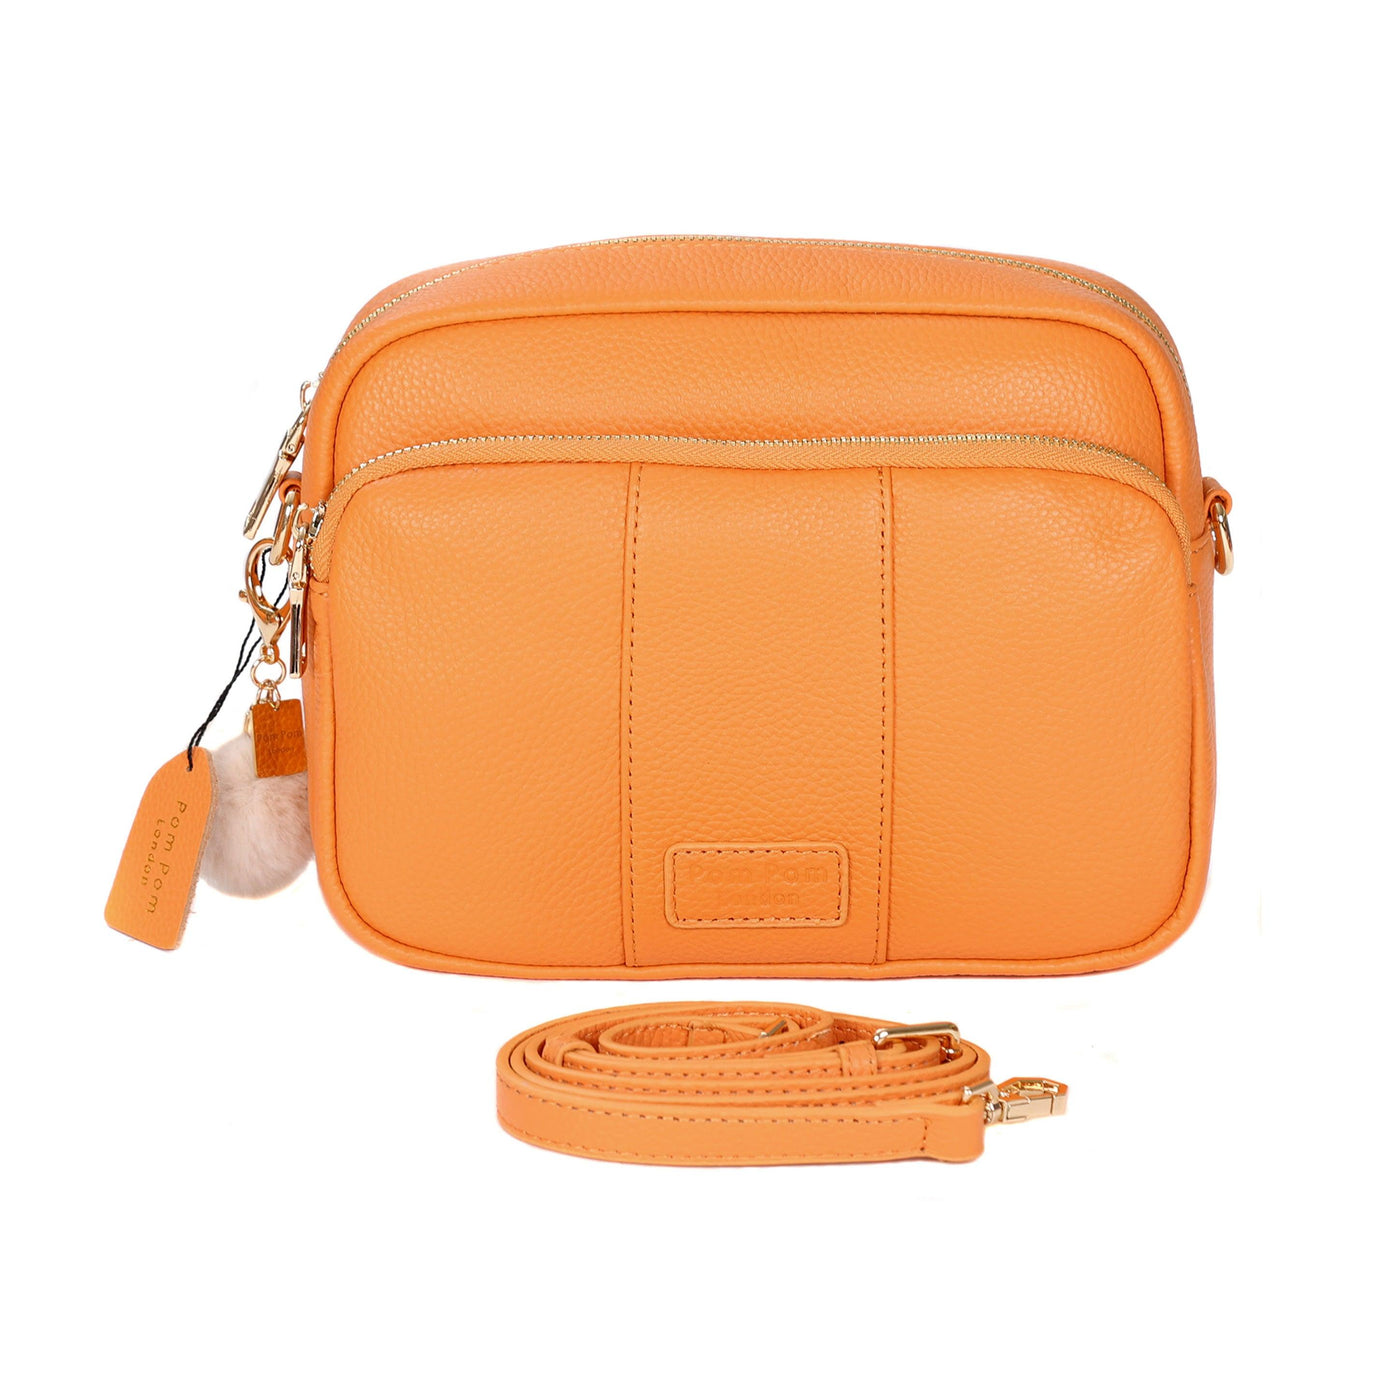 Mayfair Plus Bag Tangerine & Accessories - Pom Pom London